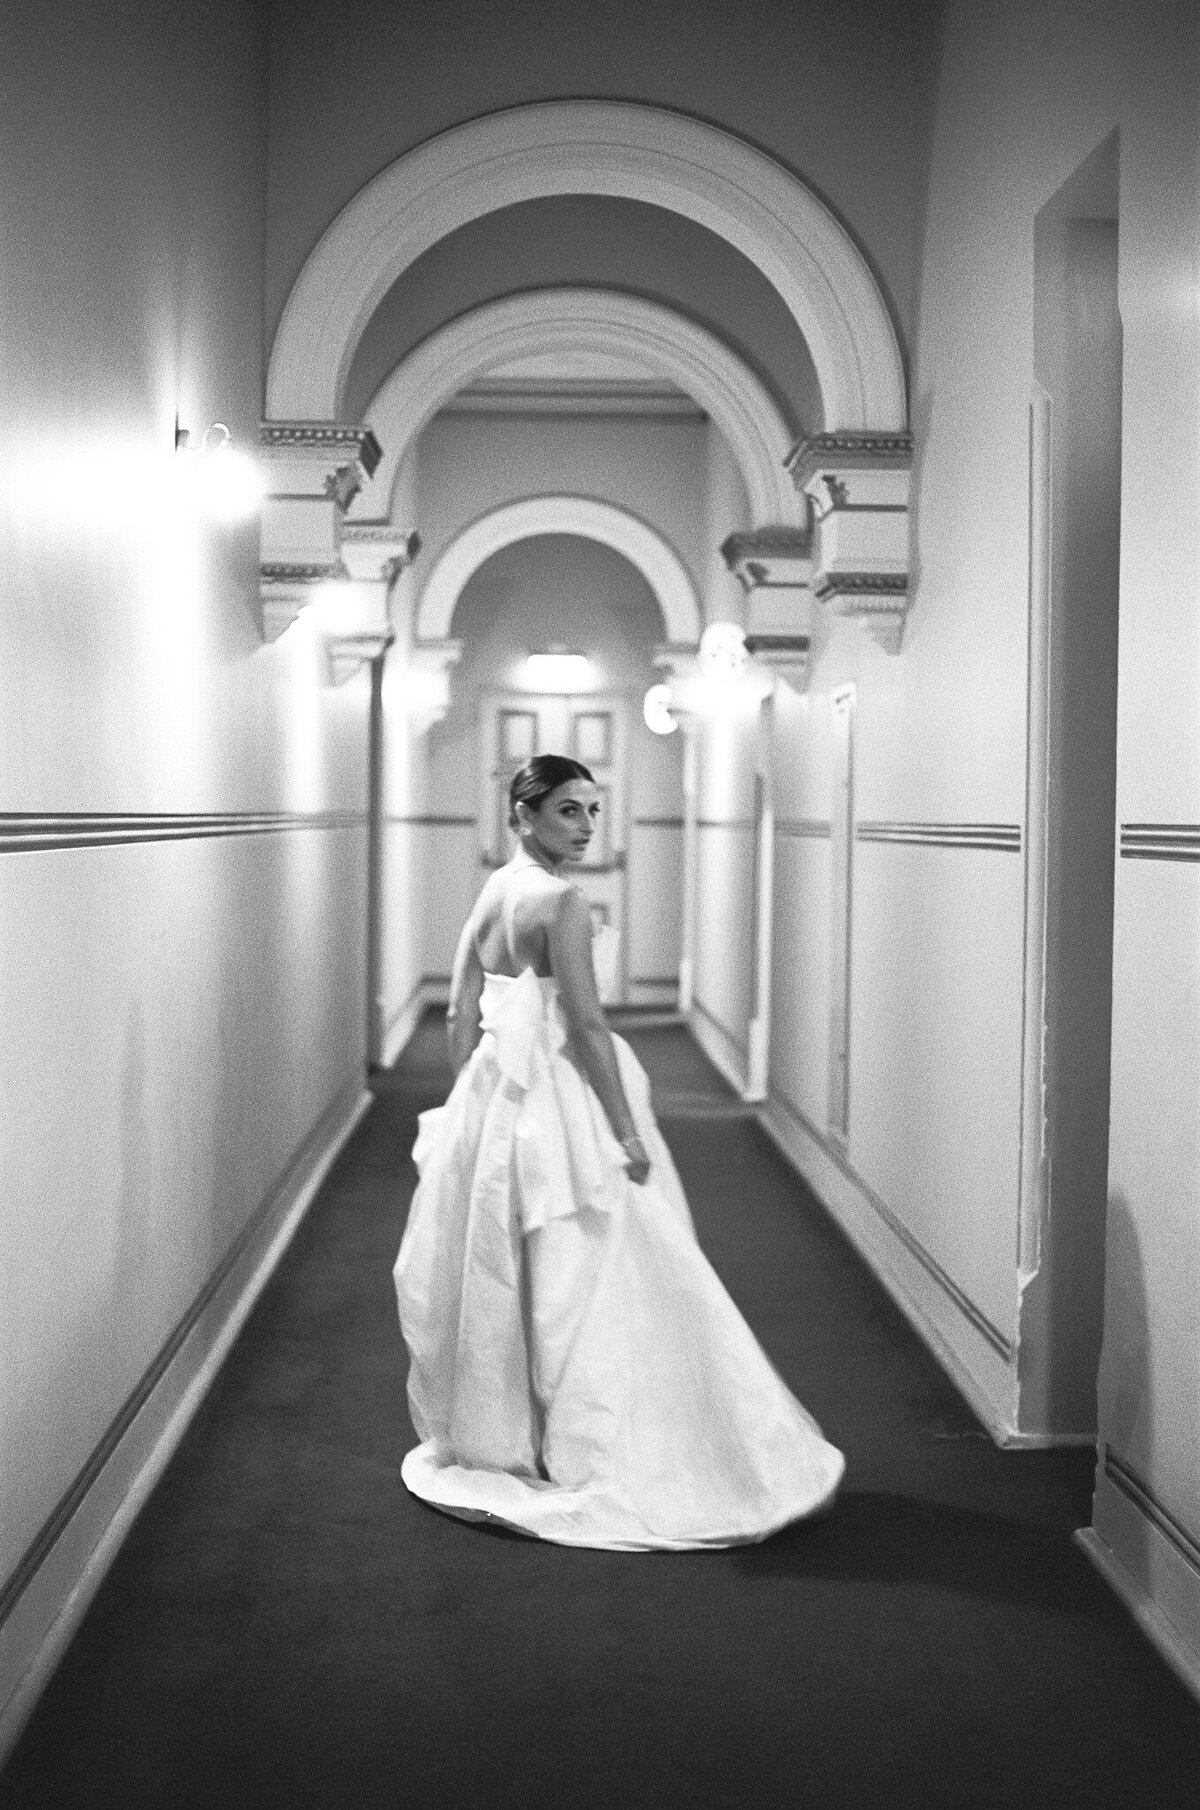 Australian Wedding Photographer Kath Young - Perth 35mm film photos-10